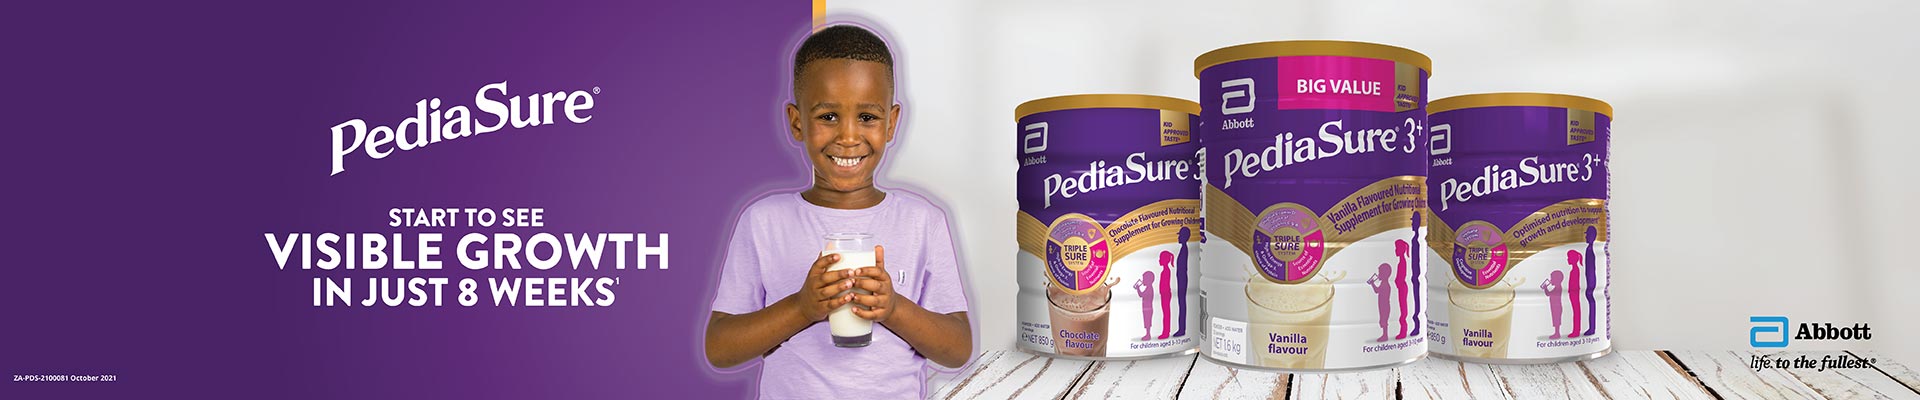 PediaSure 3+ Child Nutritional Supplement Chocolate 850g